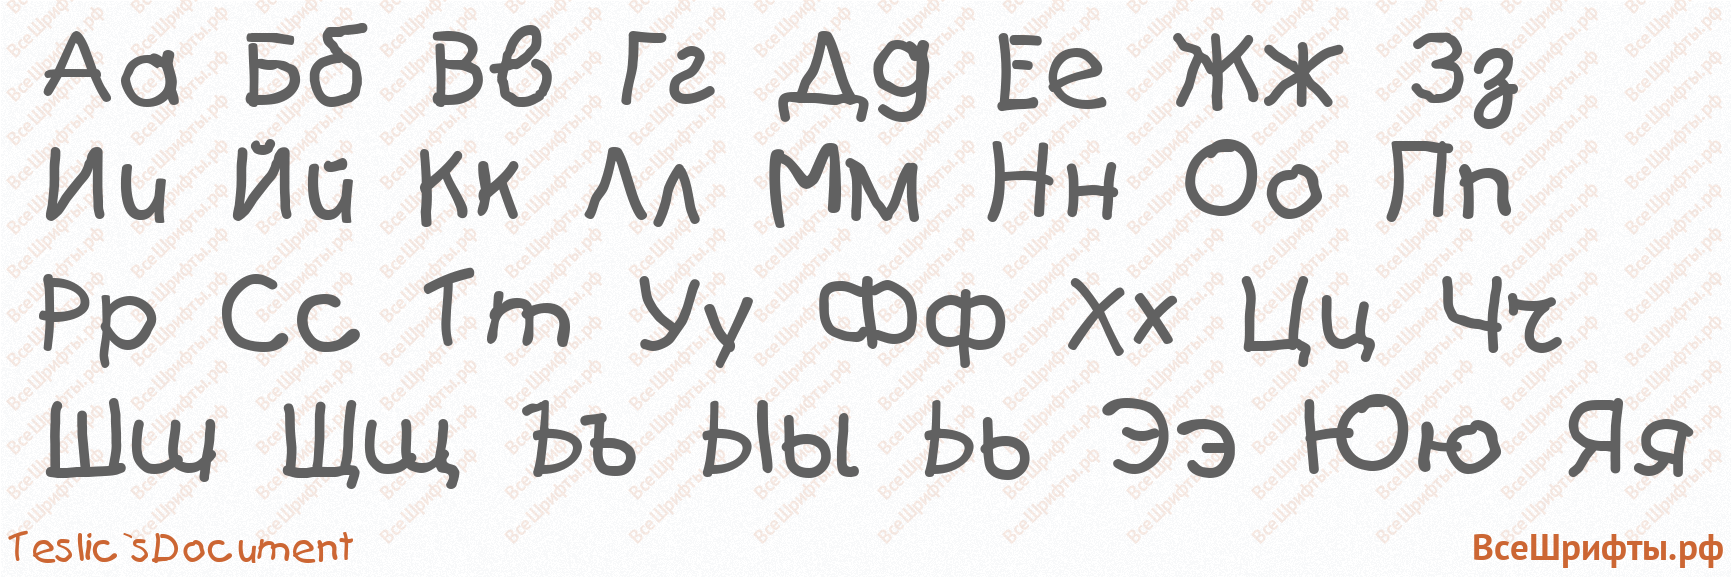 Шрифт Teslic`sDocument с русскими буквами